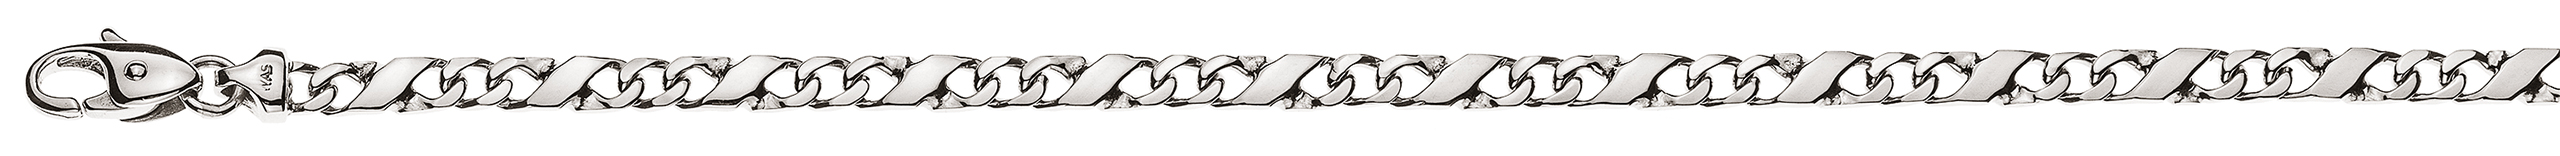 AURONOS Prestige Bracelet Carrera or blanc 18 carats 22cm 4mm